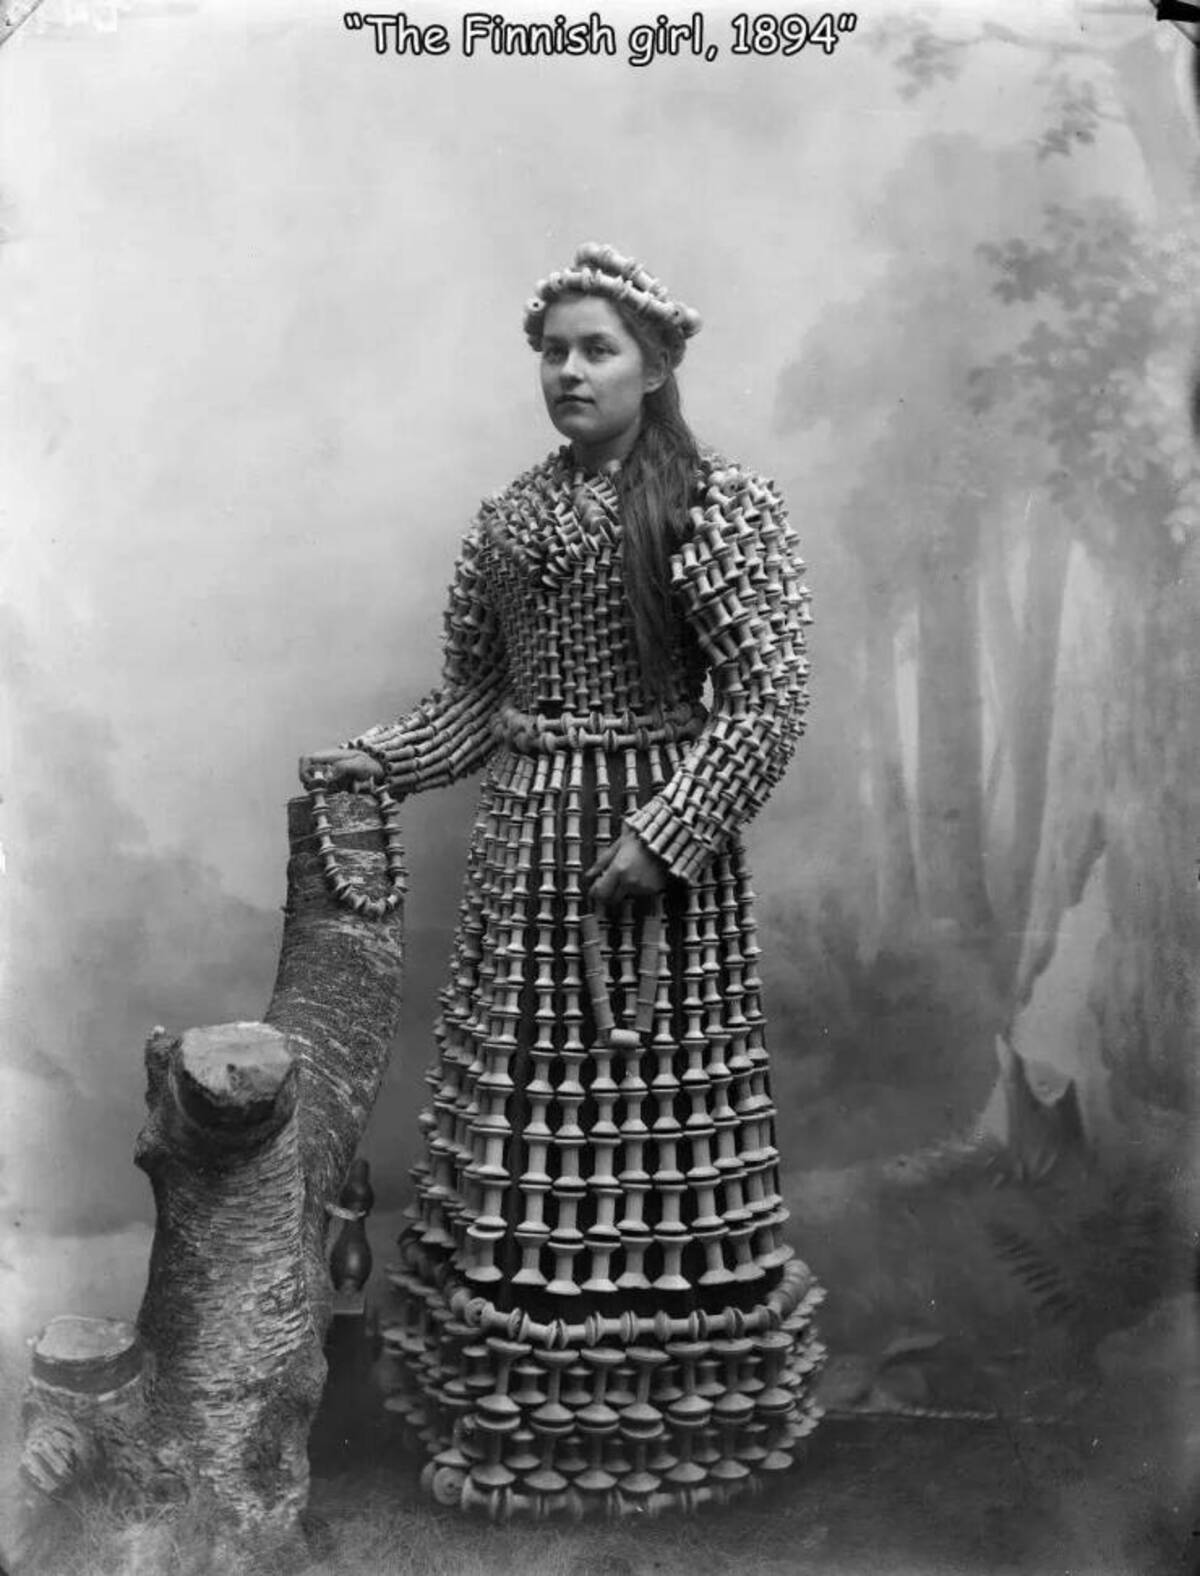 riihisaari – savonlinnan museo, savonlinna museum - "The Finnish girl, 1894"